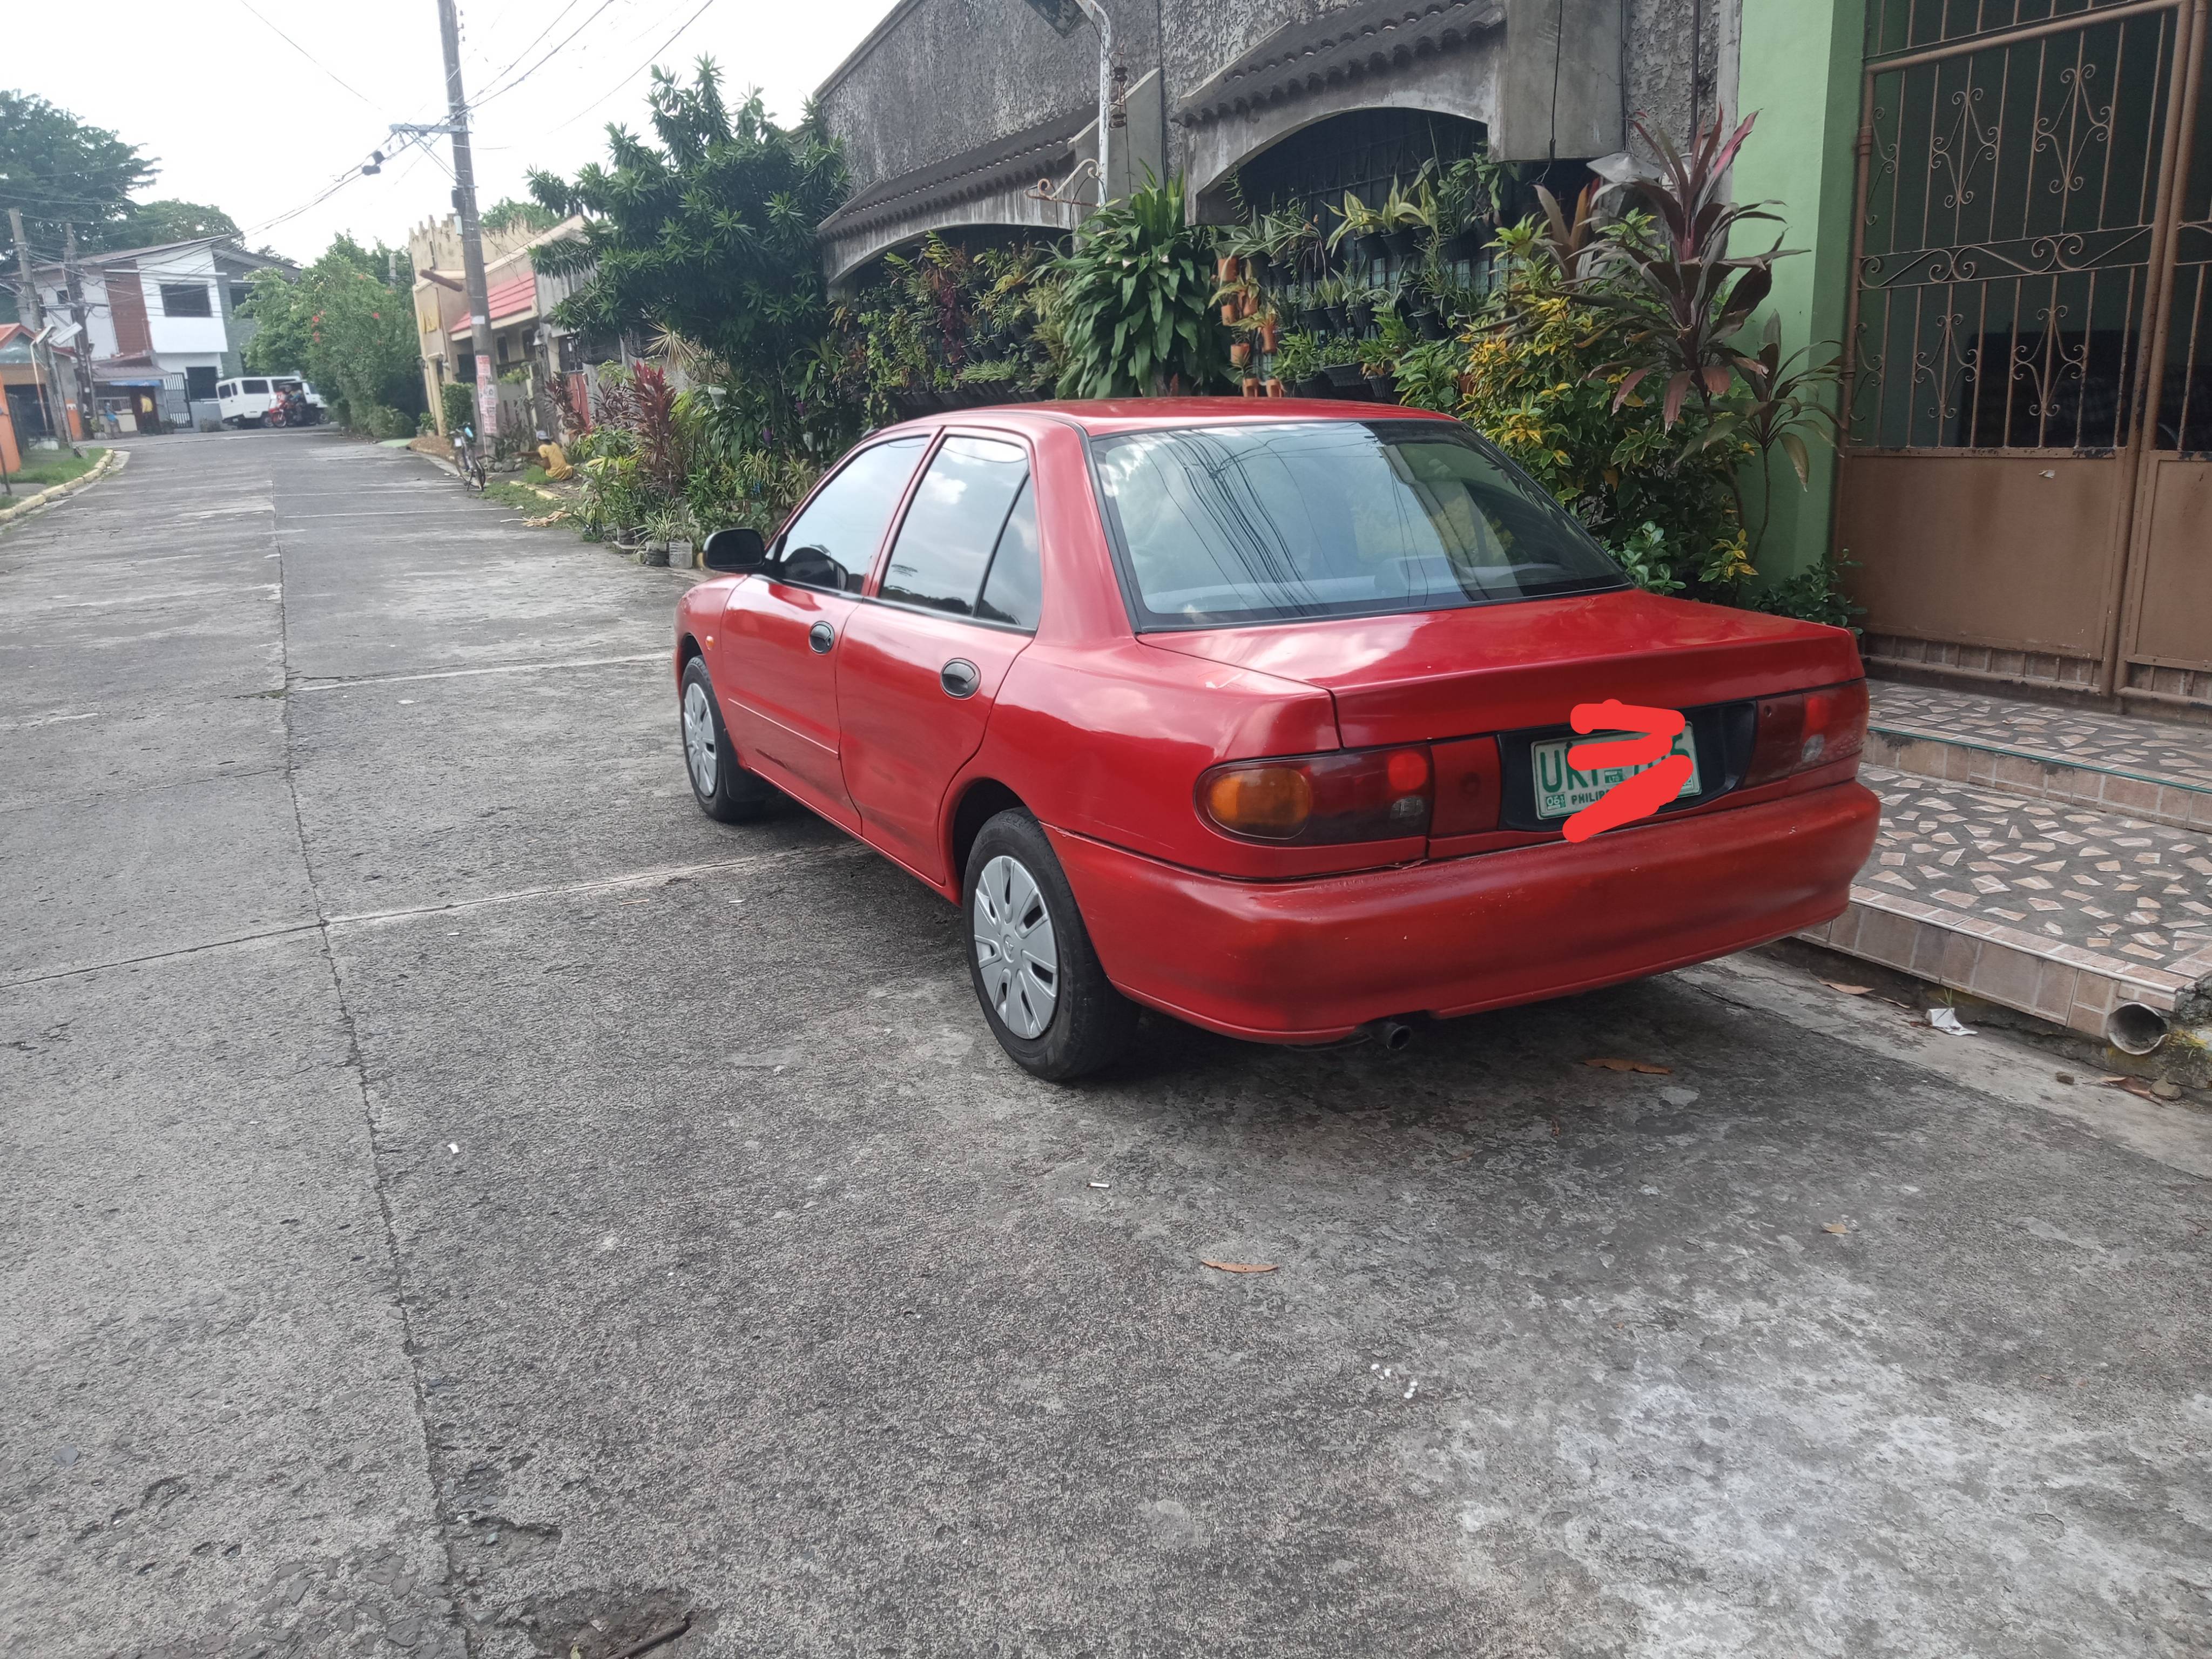 Used Cars for Sale Philippines Below 150k  Zigwheels.ph